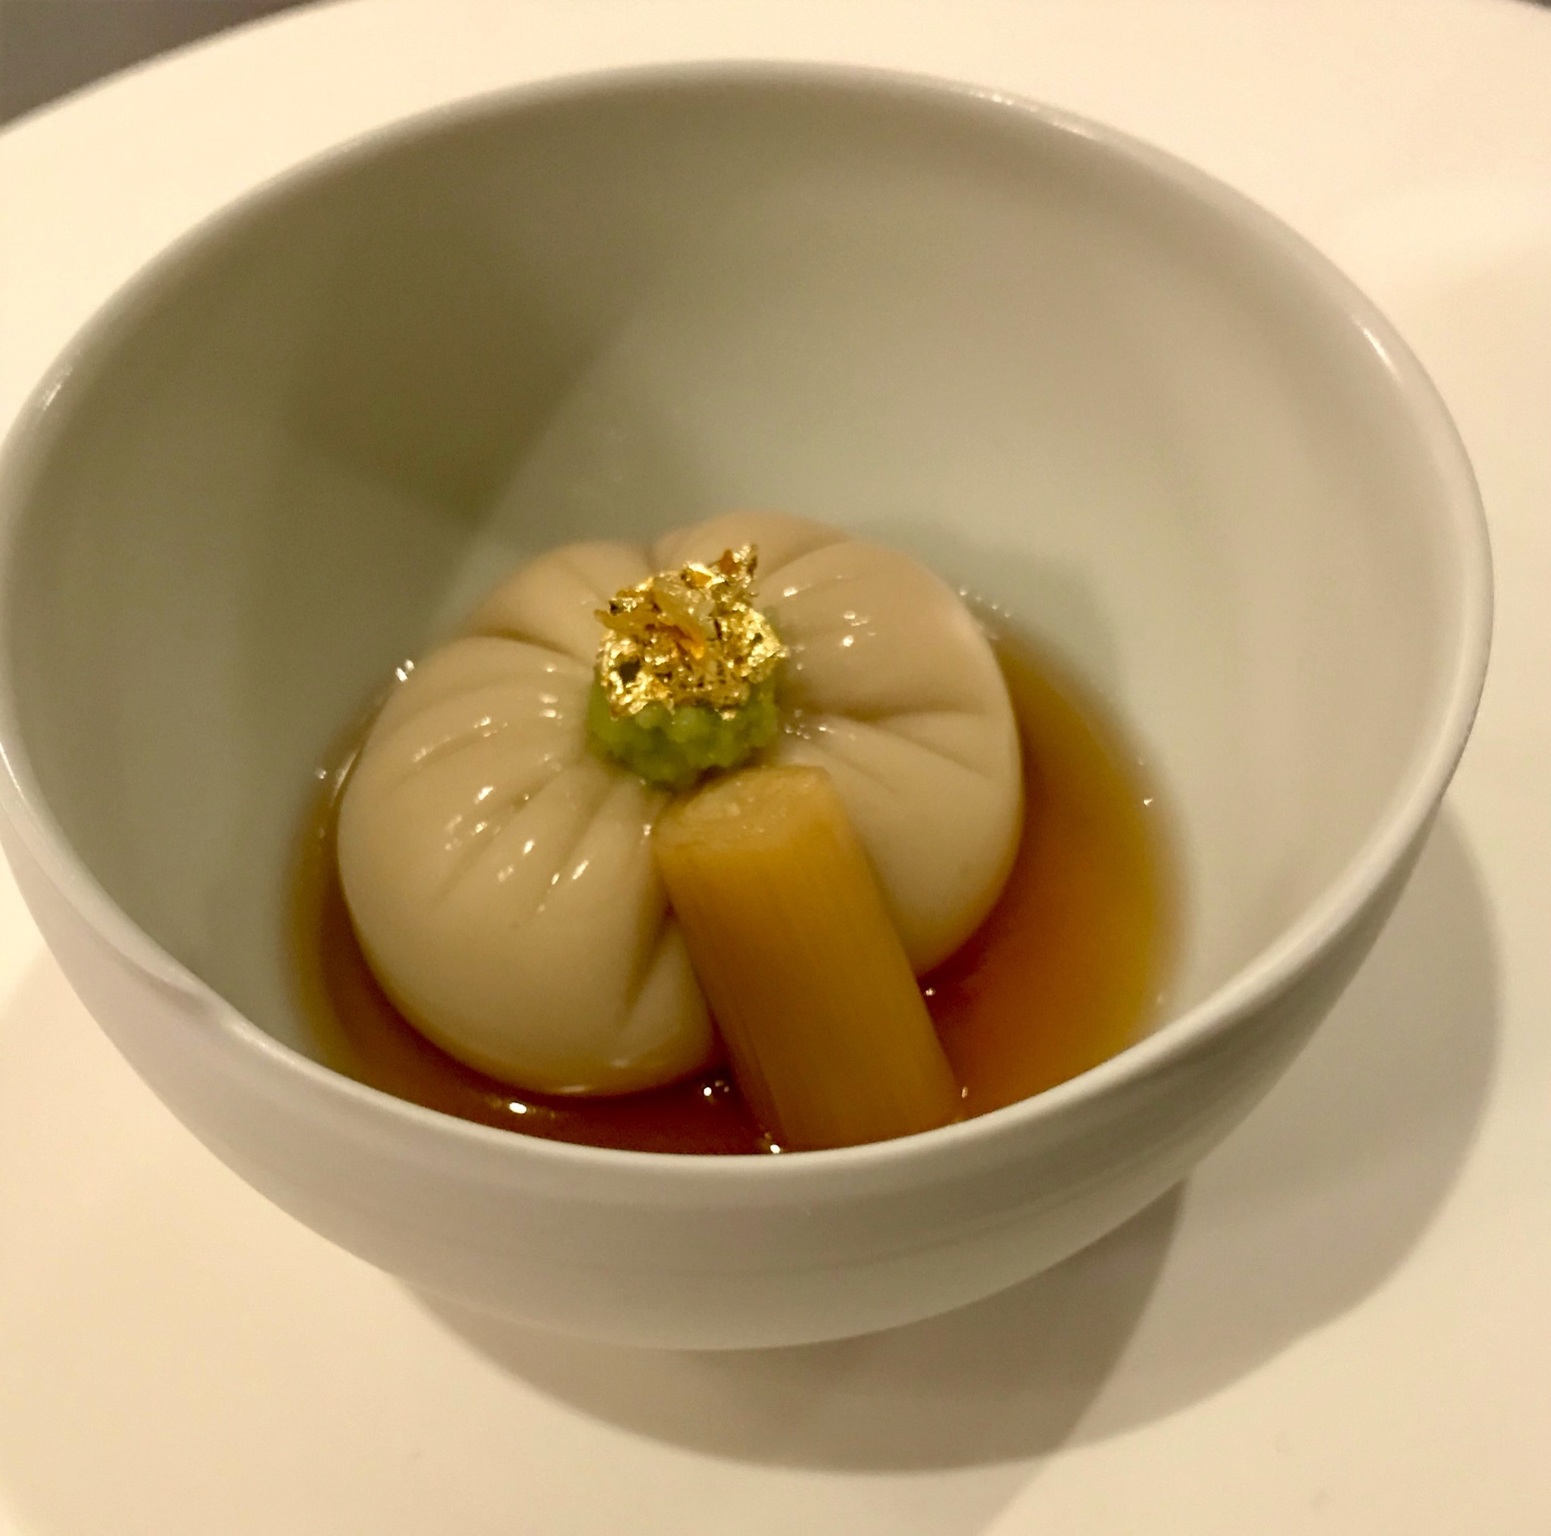 Mosu, Seoul Michelin Star Restaurant 2023 Reviews, Photos, Address